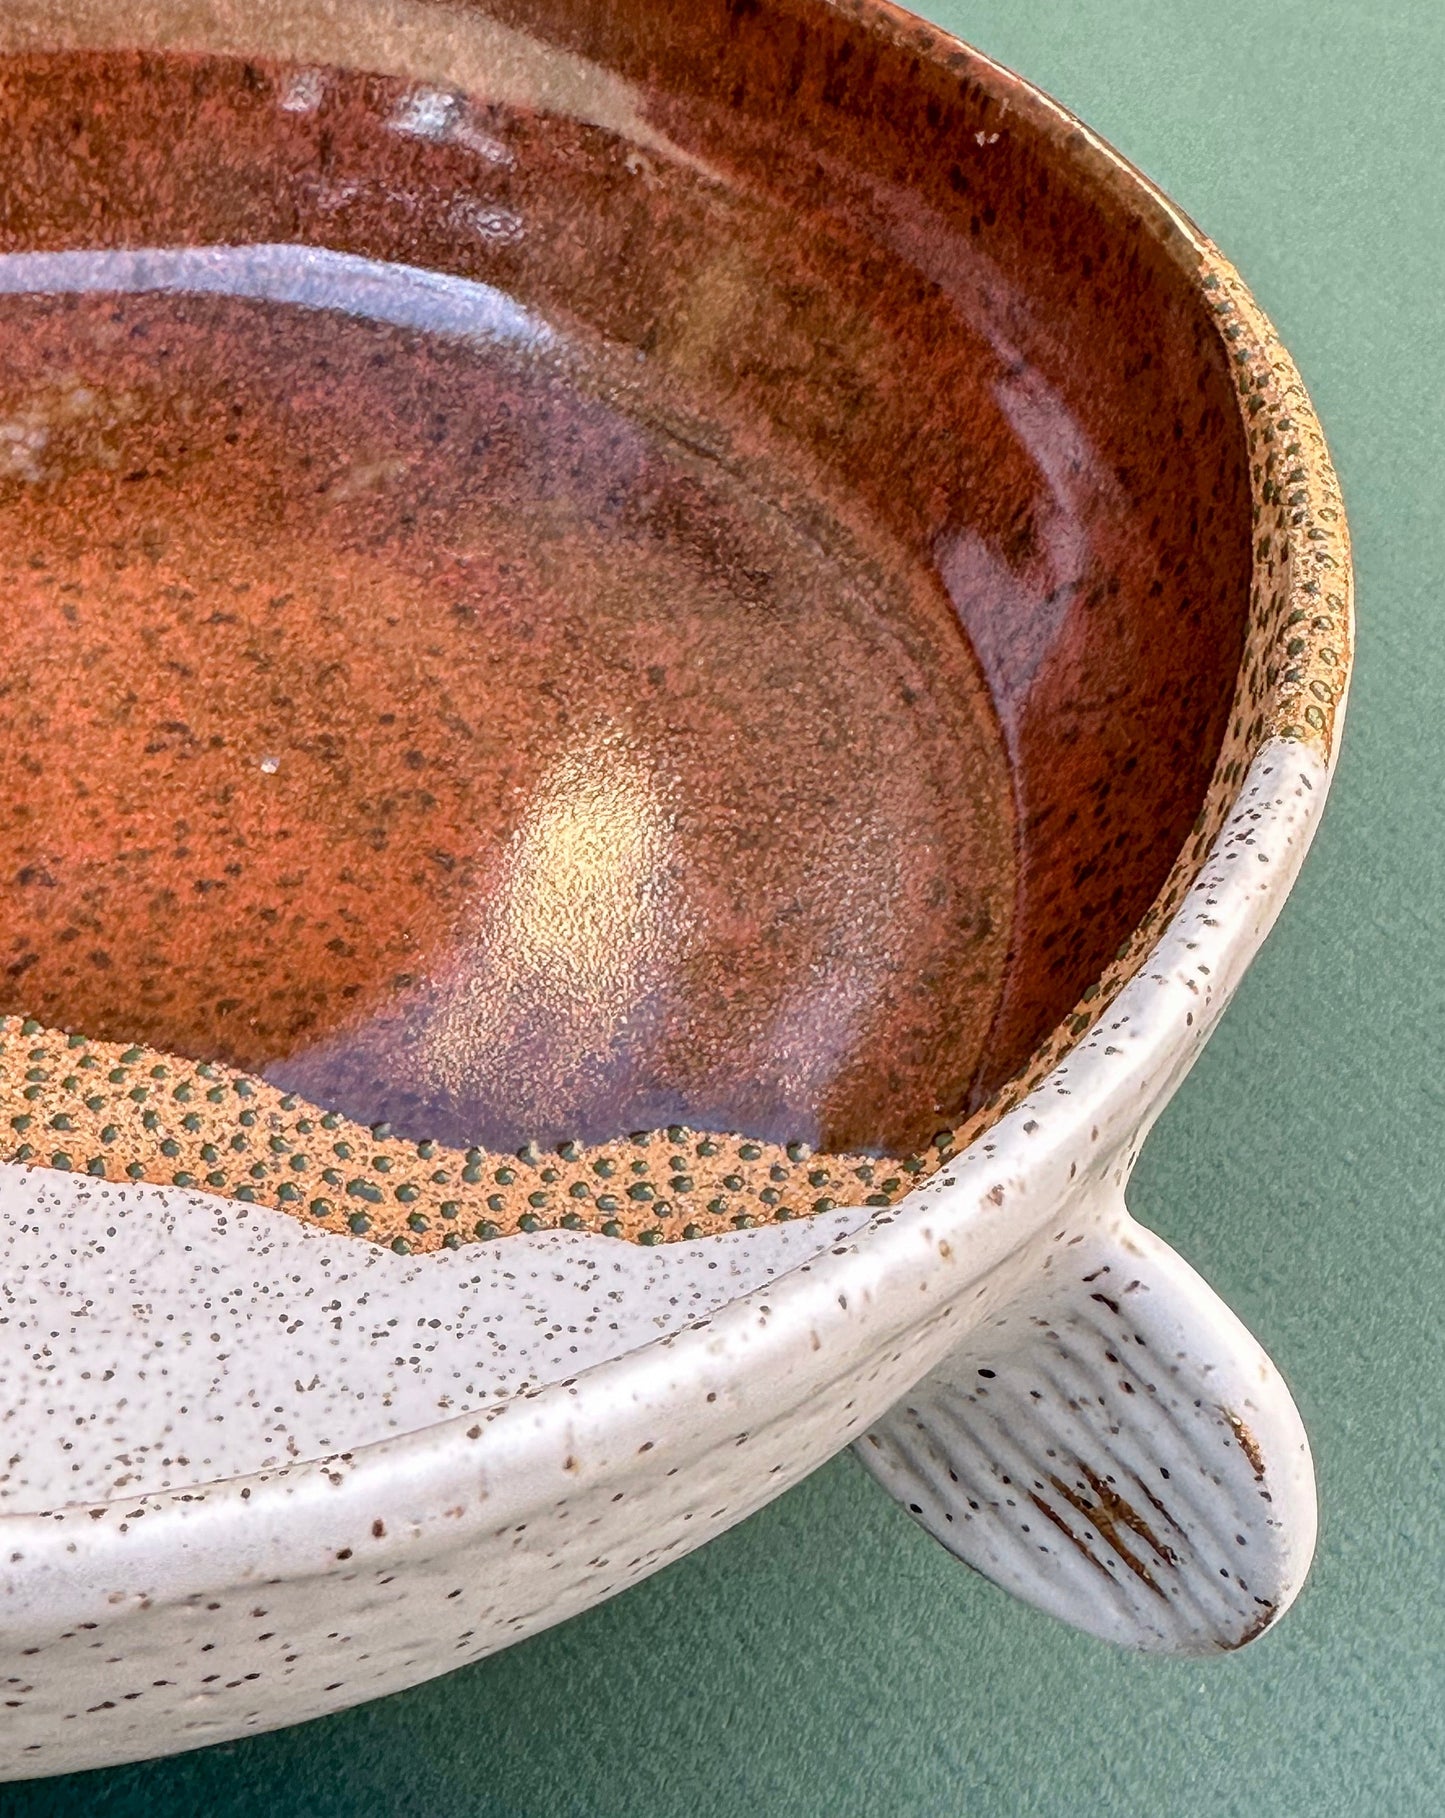 Speckled White + Chestnut Pedestal Bowl